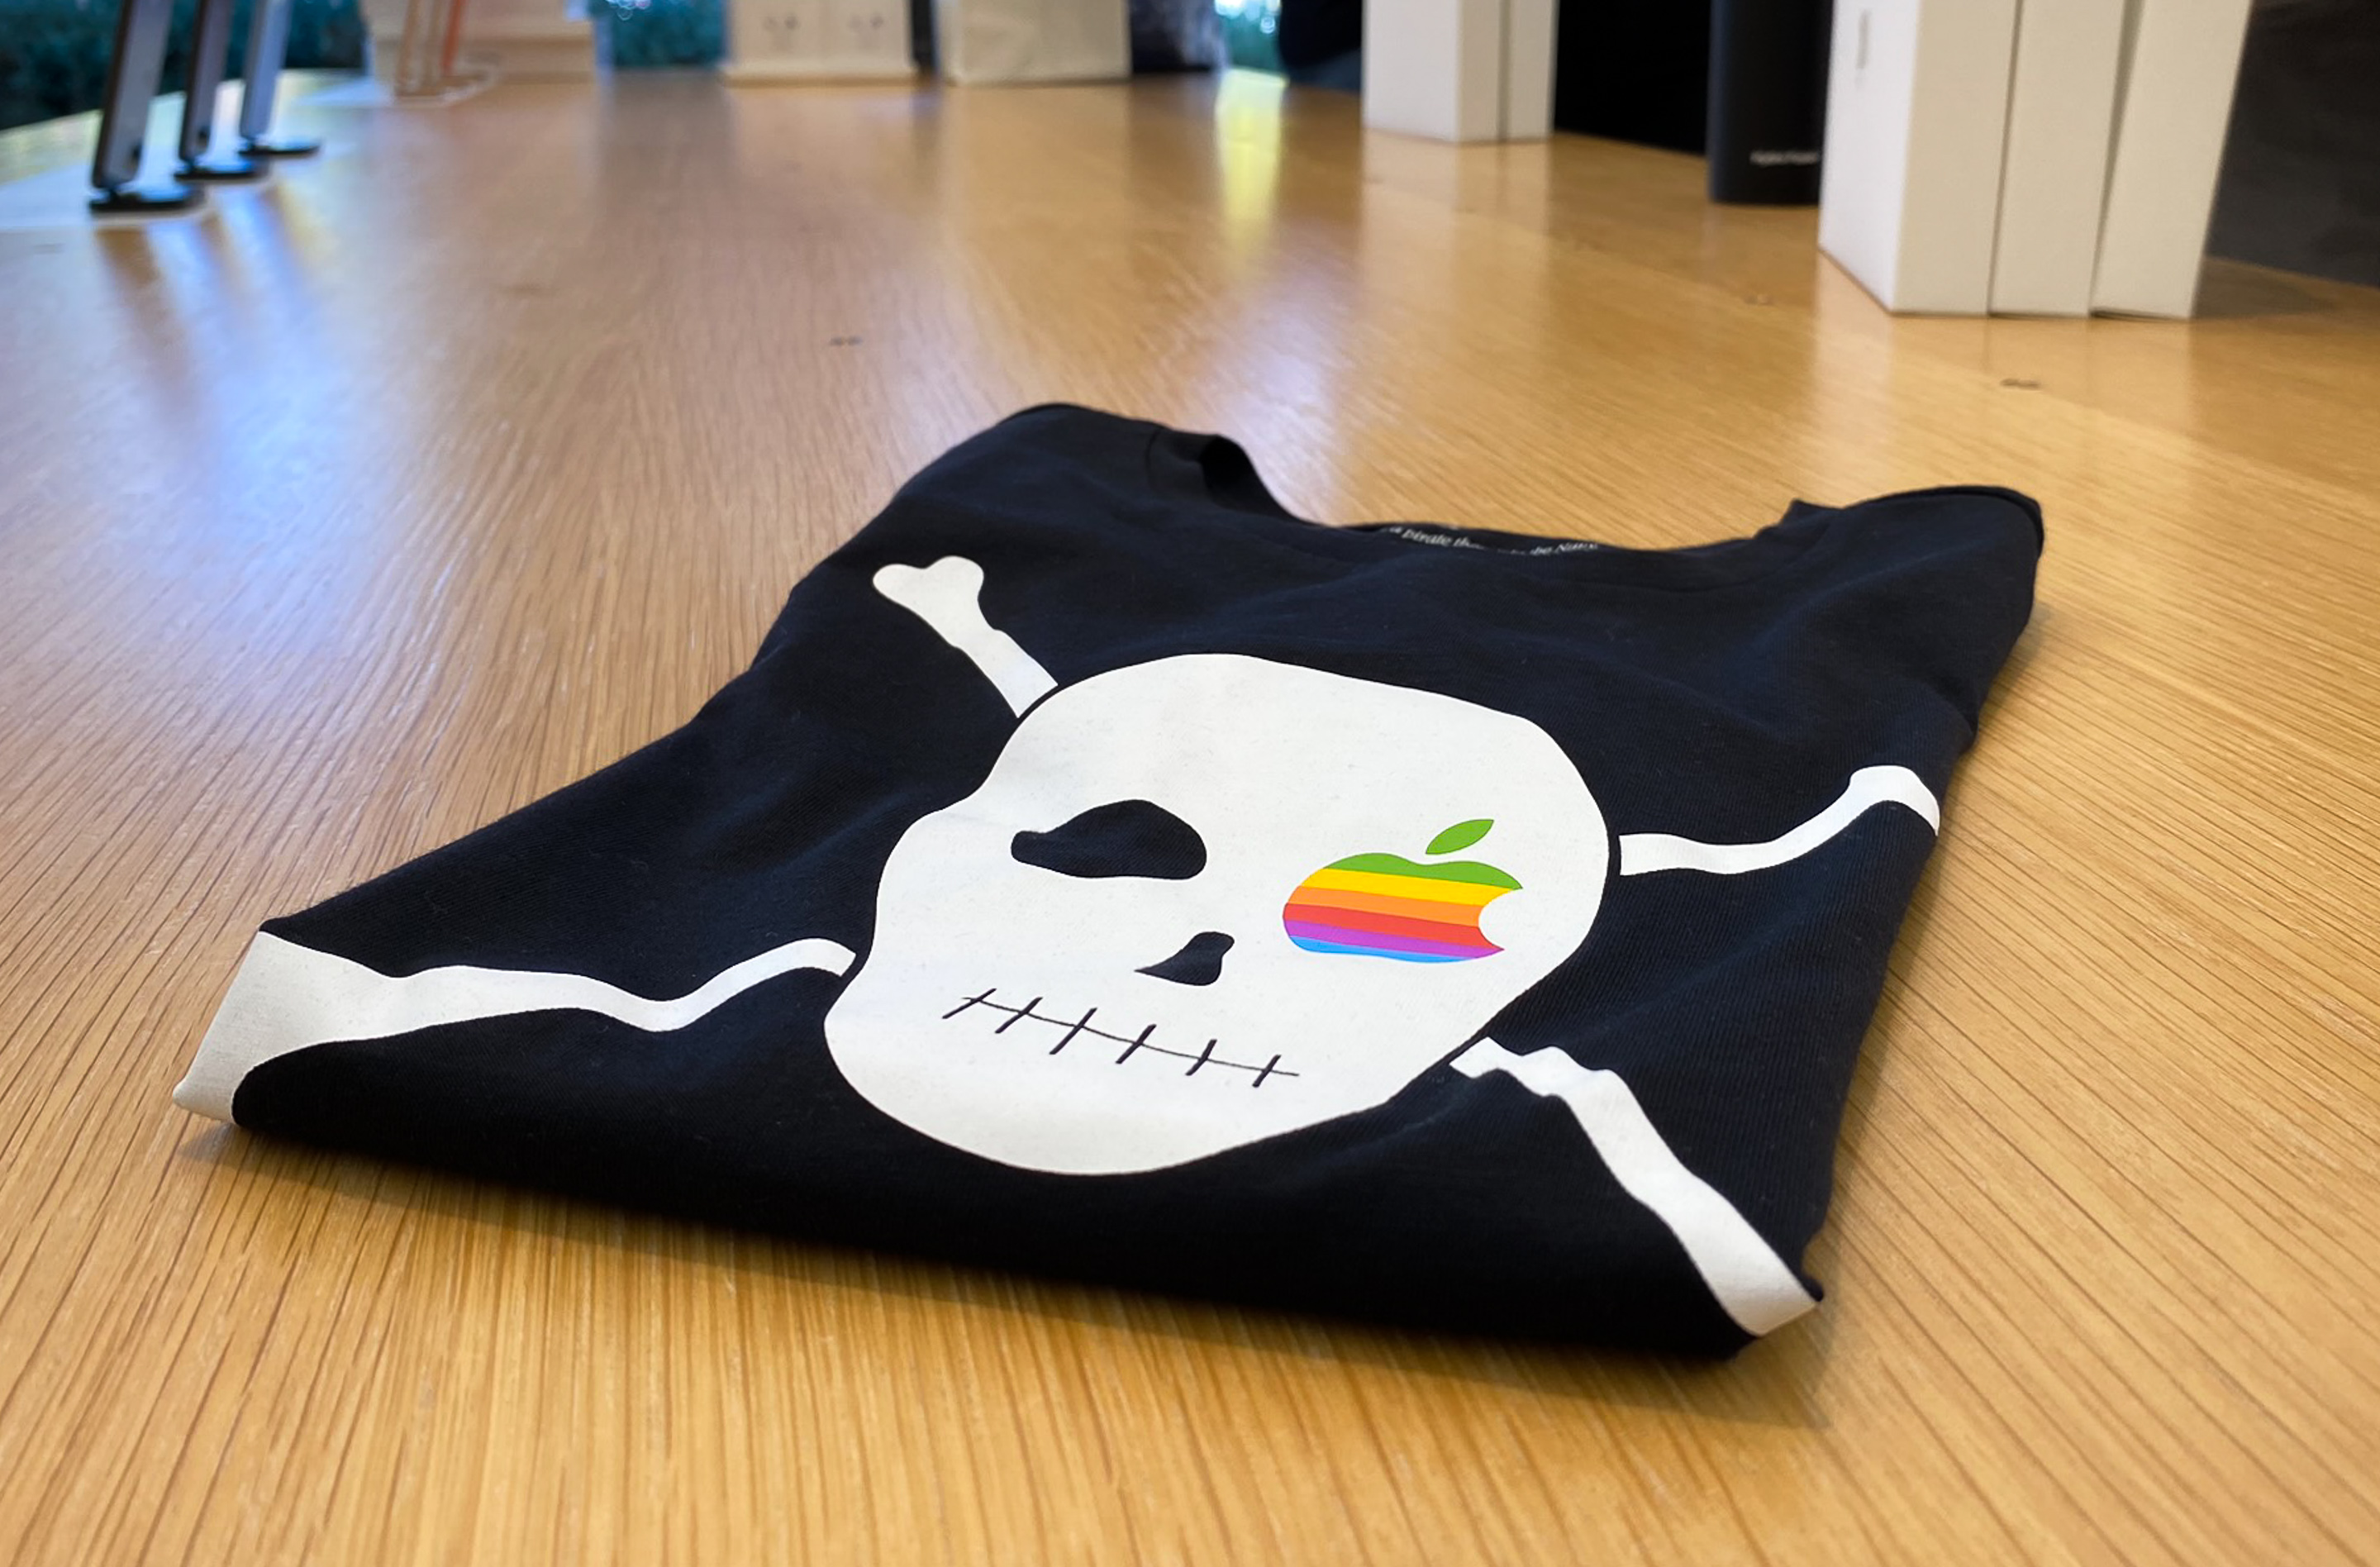 where to buy pirate shirts